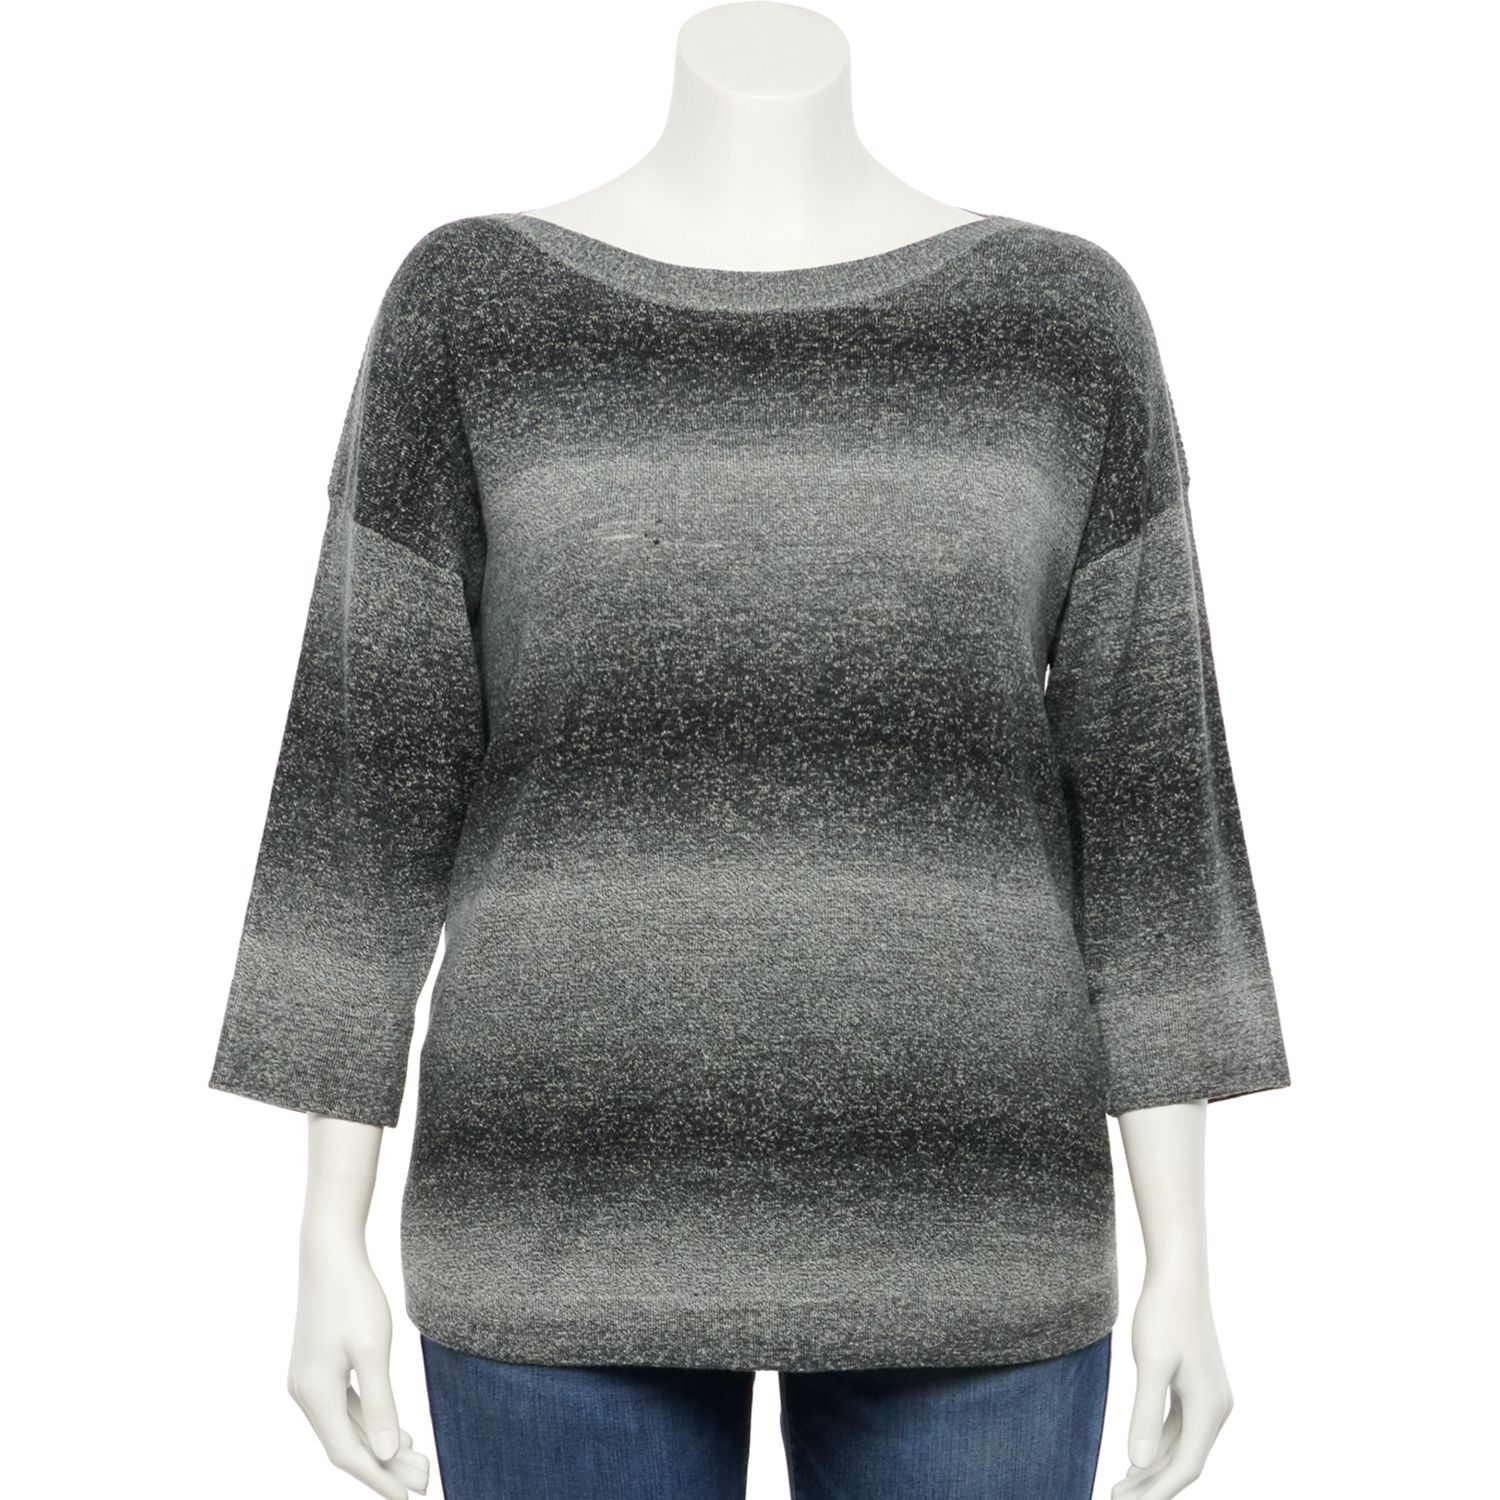 Plus Size Sweaters | Kohl's